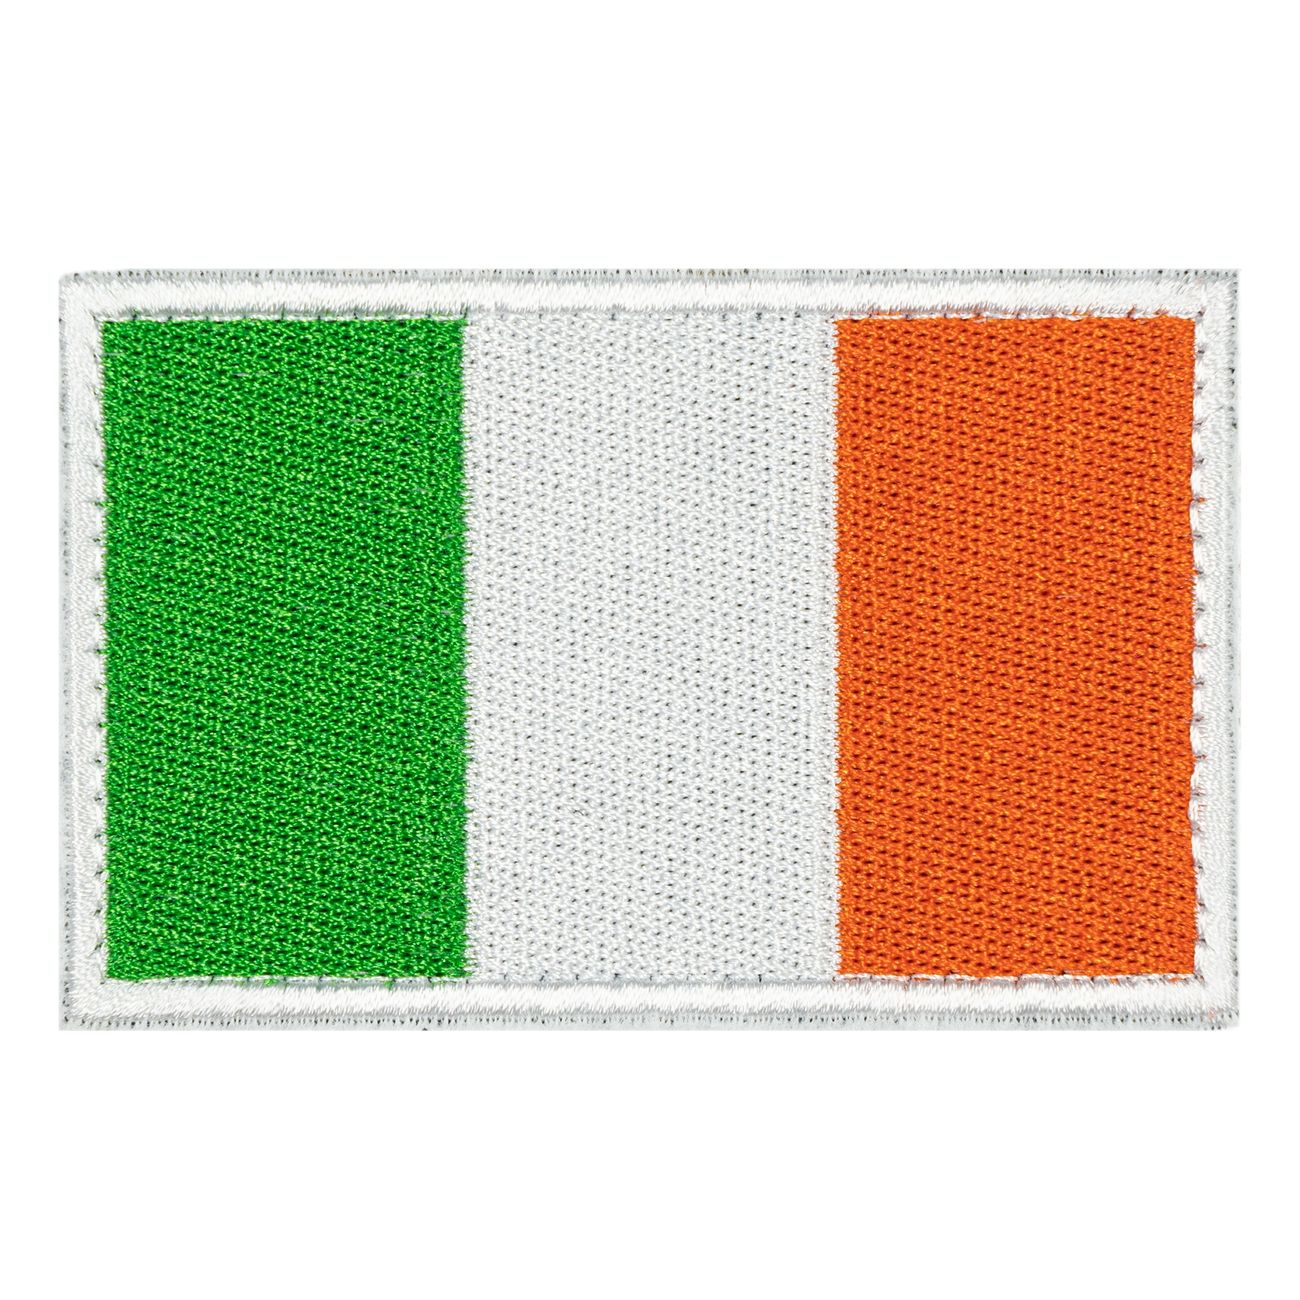 tygmarke-irlandska-flaggan-92017-1